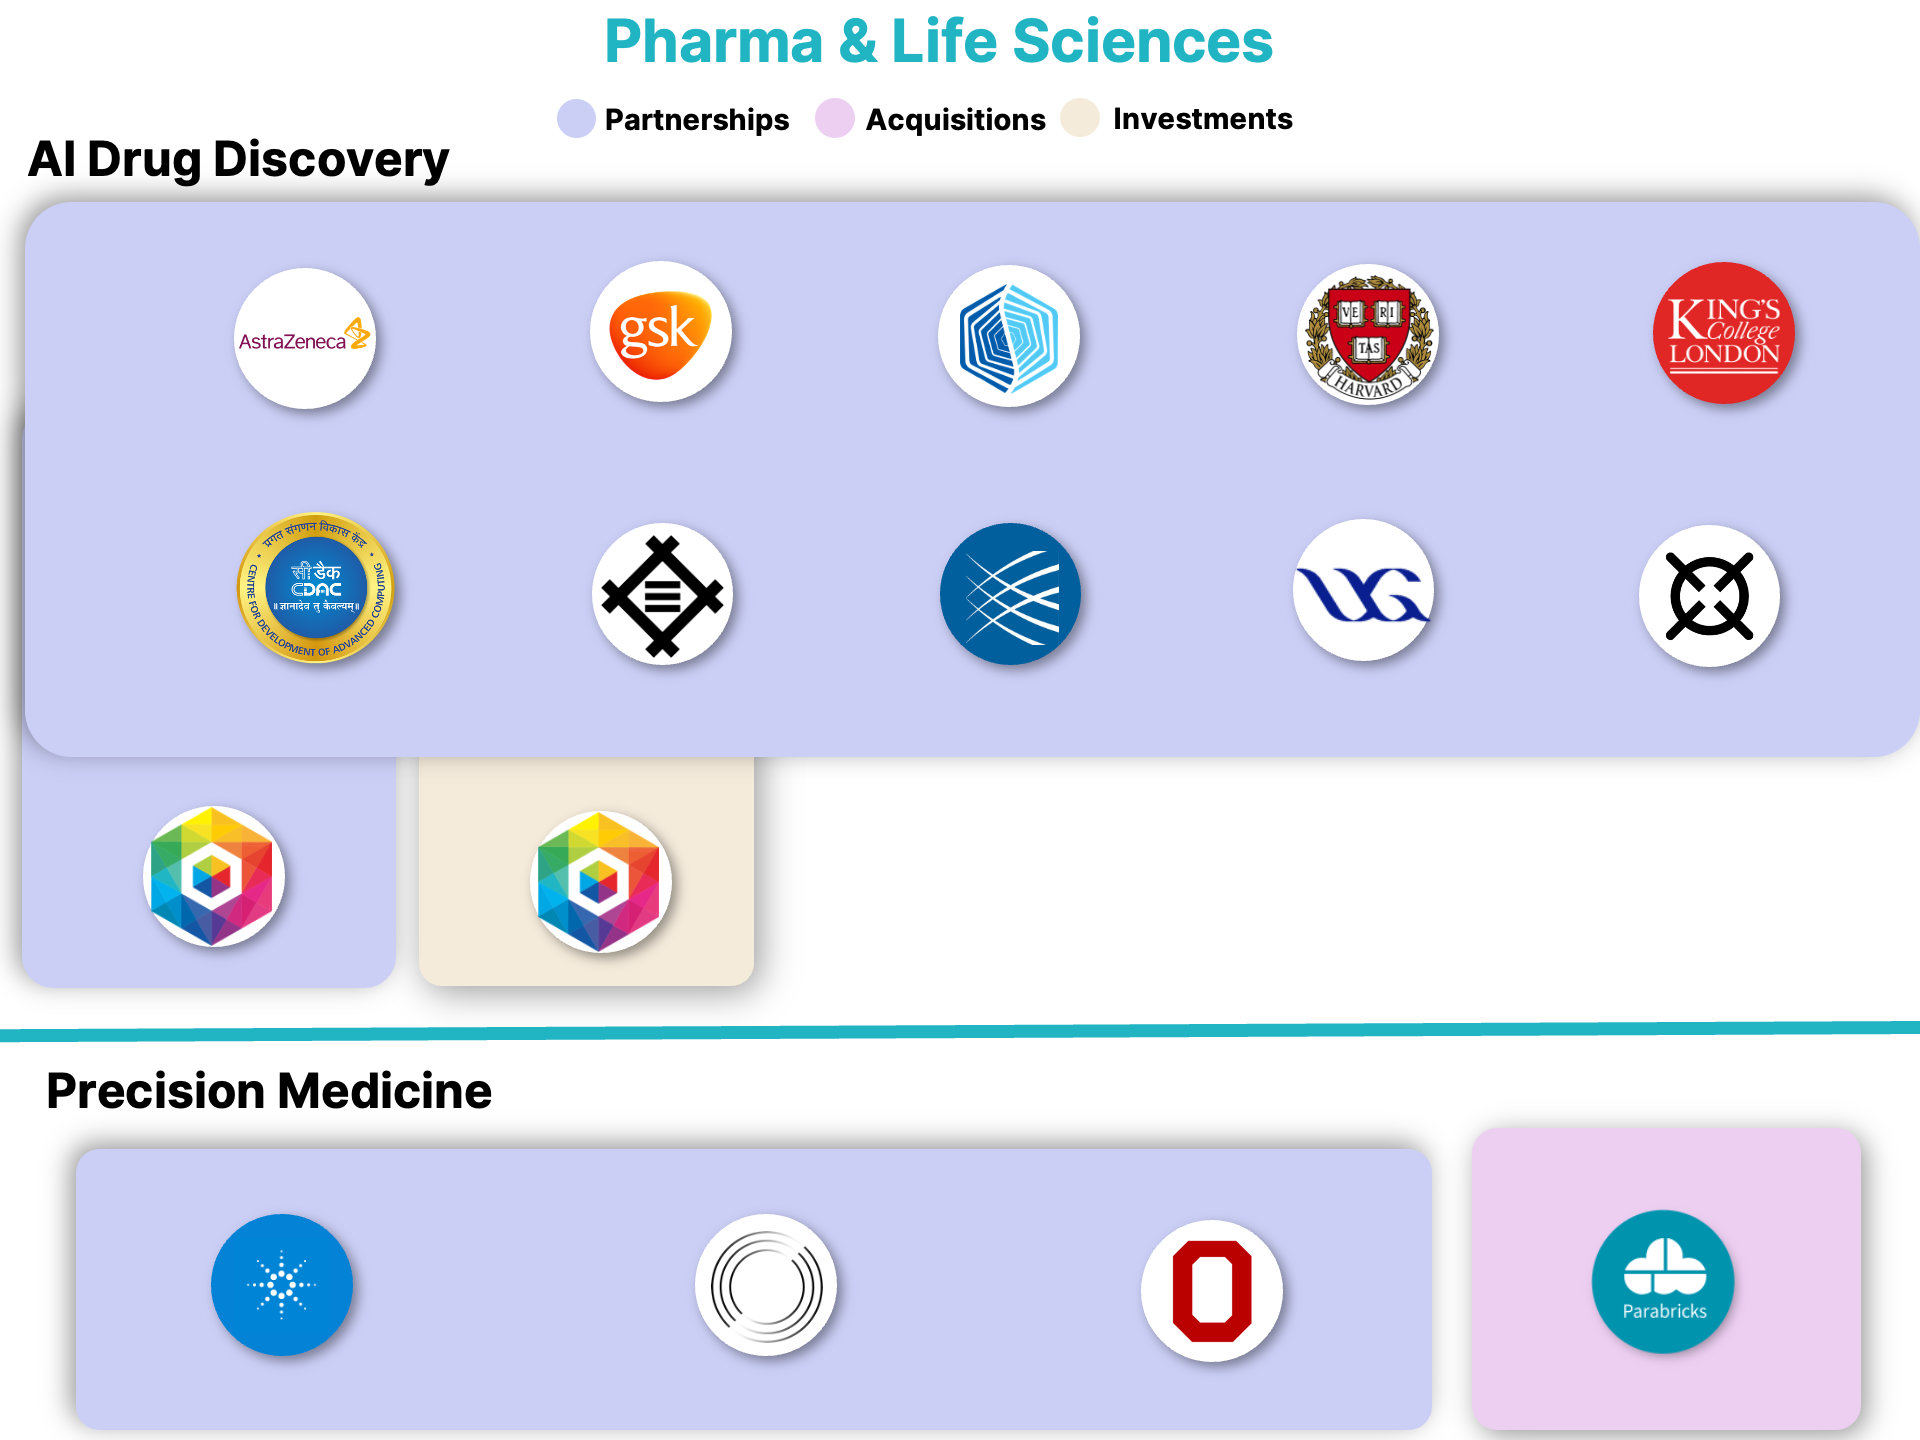 NVIDIA - Pharma & Life Sciences